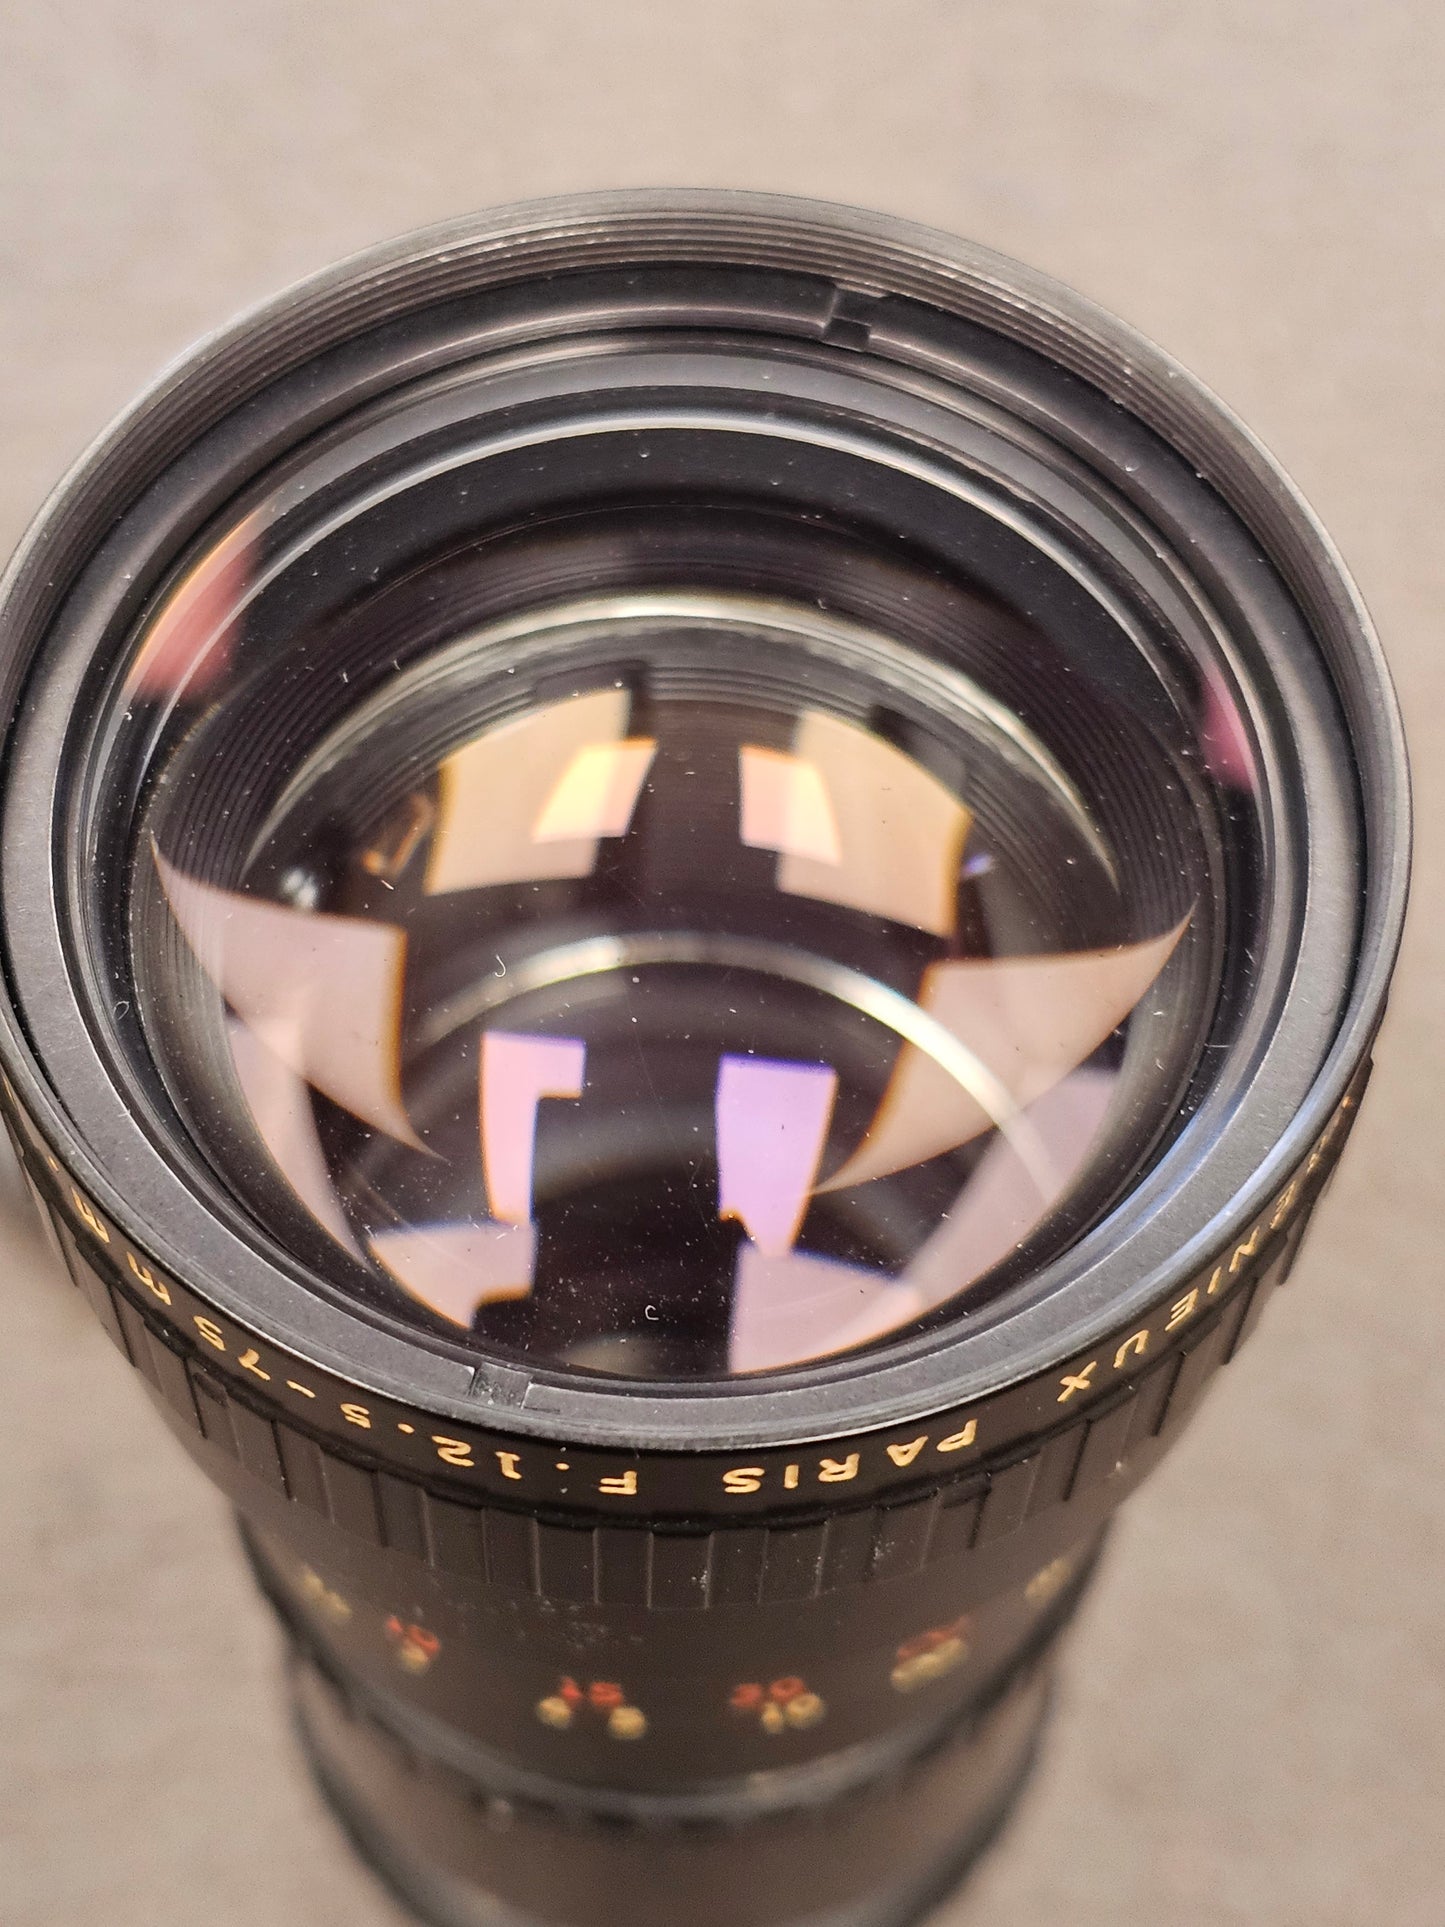 Angenieux 12.5-75mm f2.2/T2.5 C-Mount Zoom lens Type 6x12.5B S# 1161728